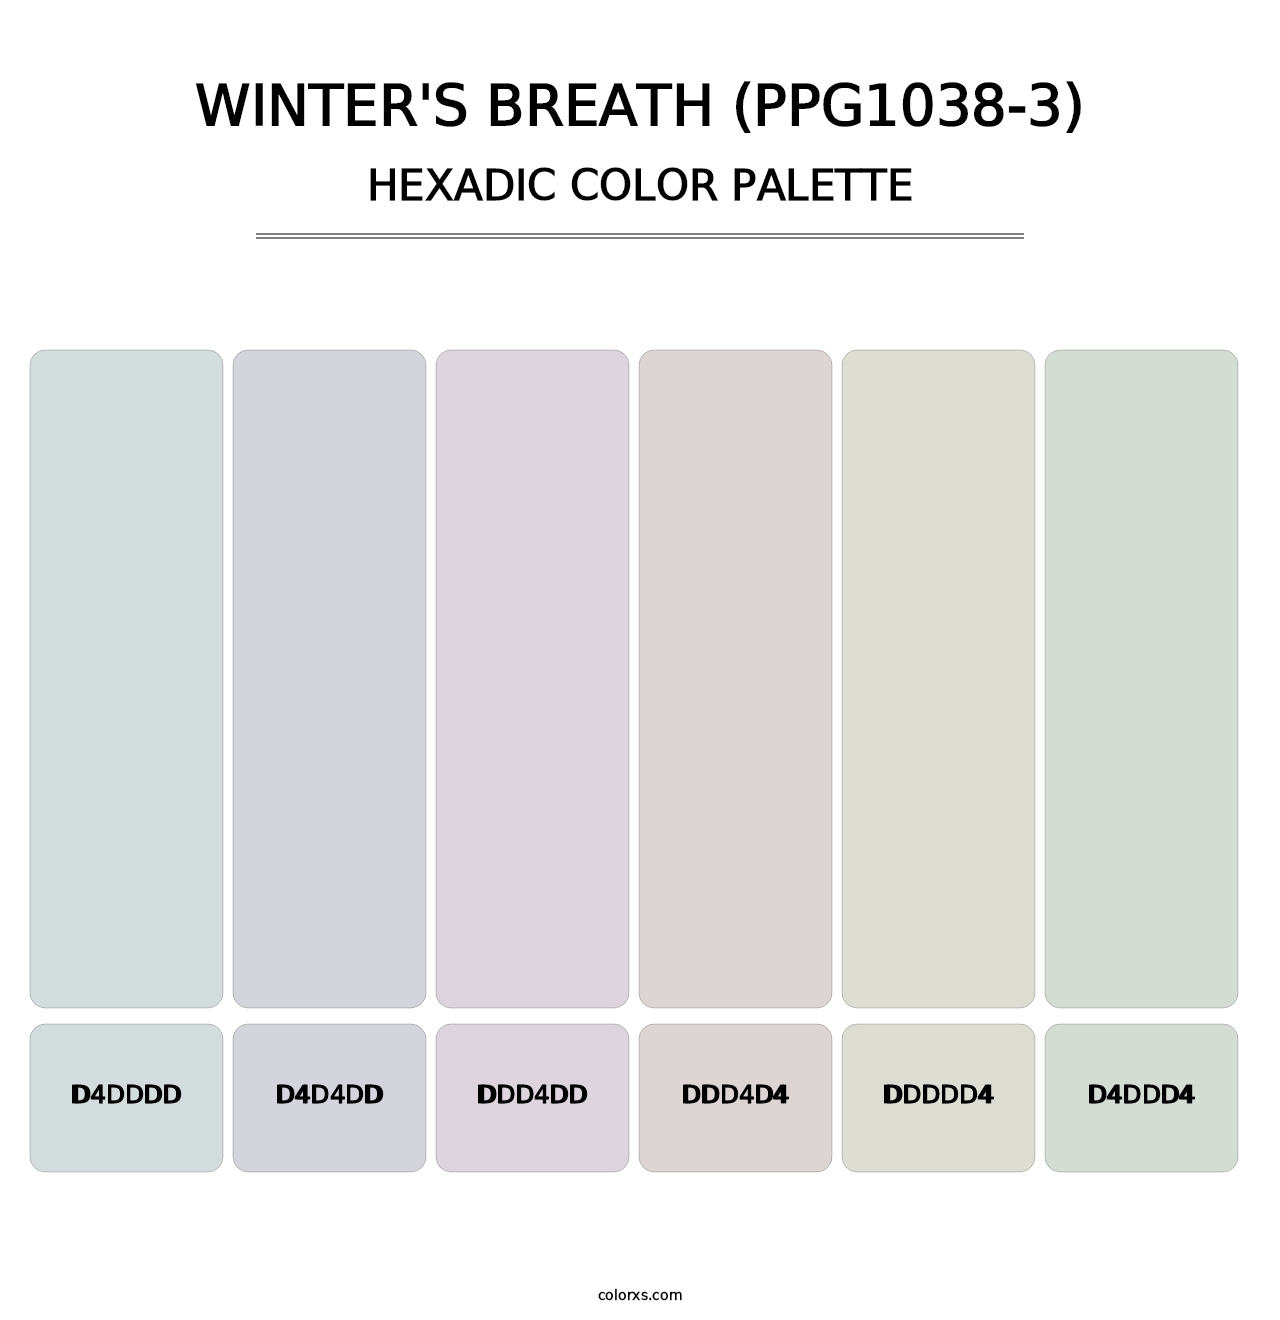 Winter's Breath (PPG1038-3) - Hexadic Color Palette